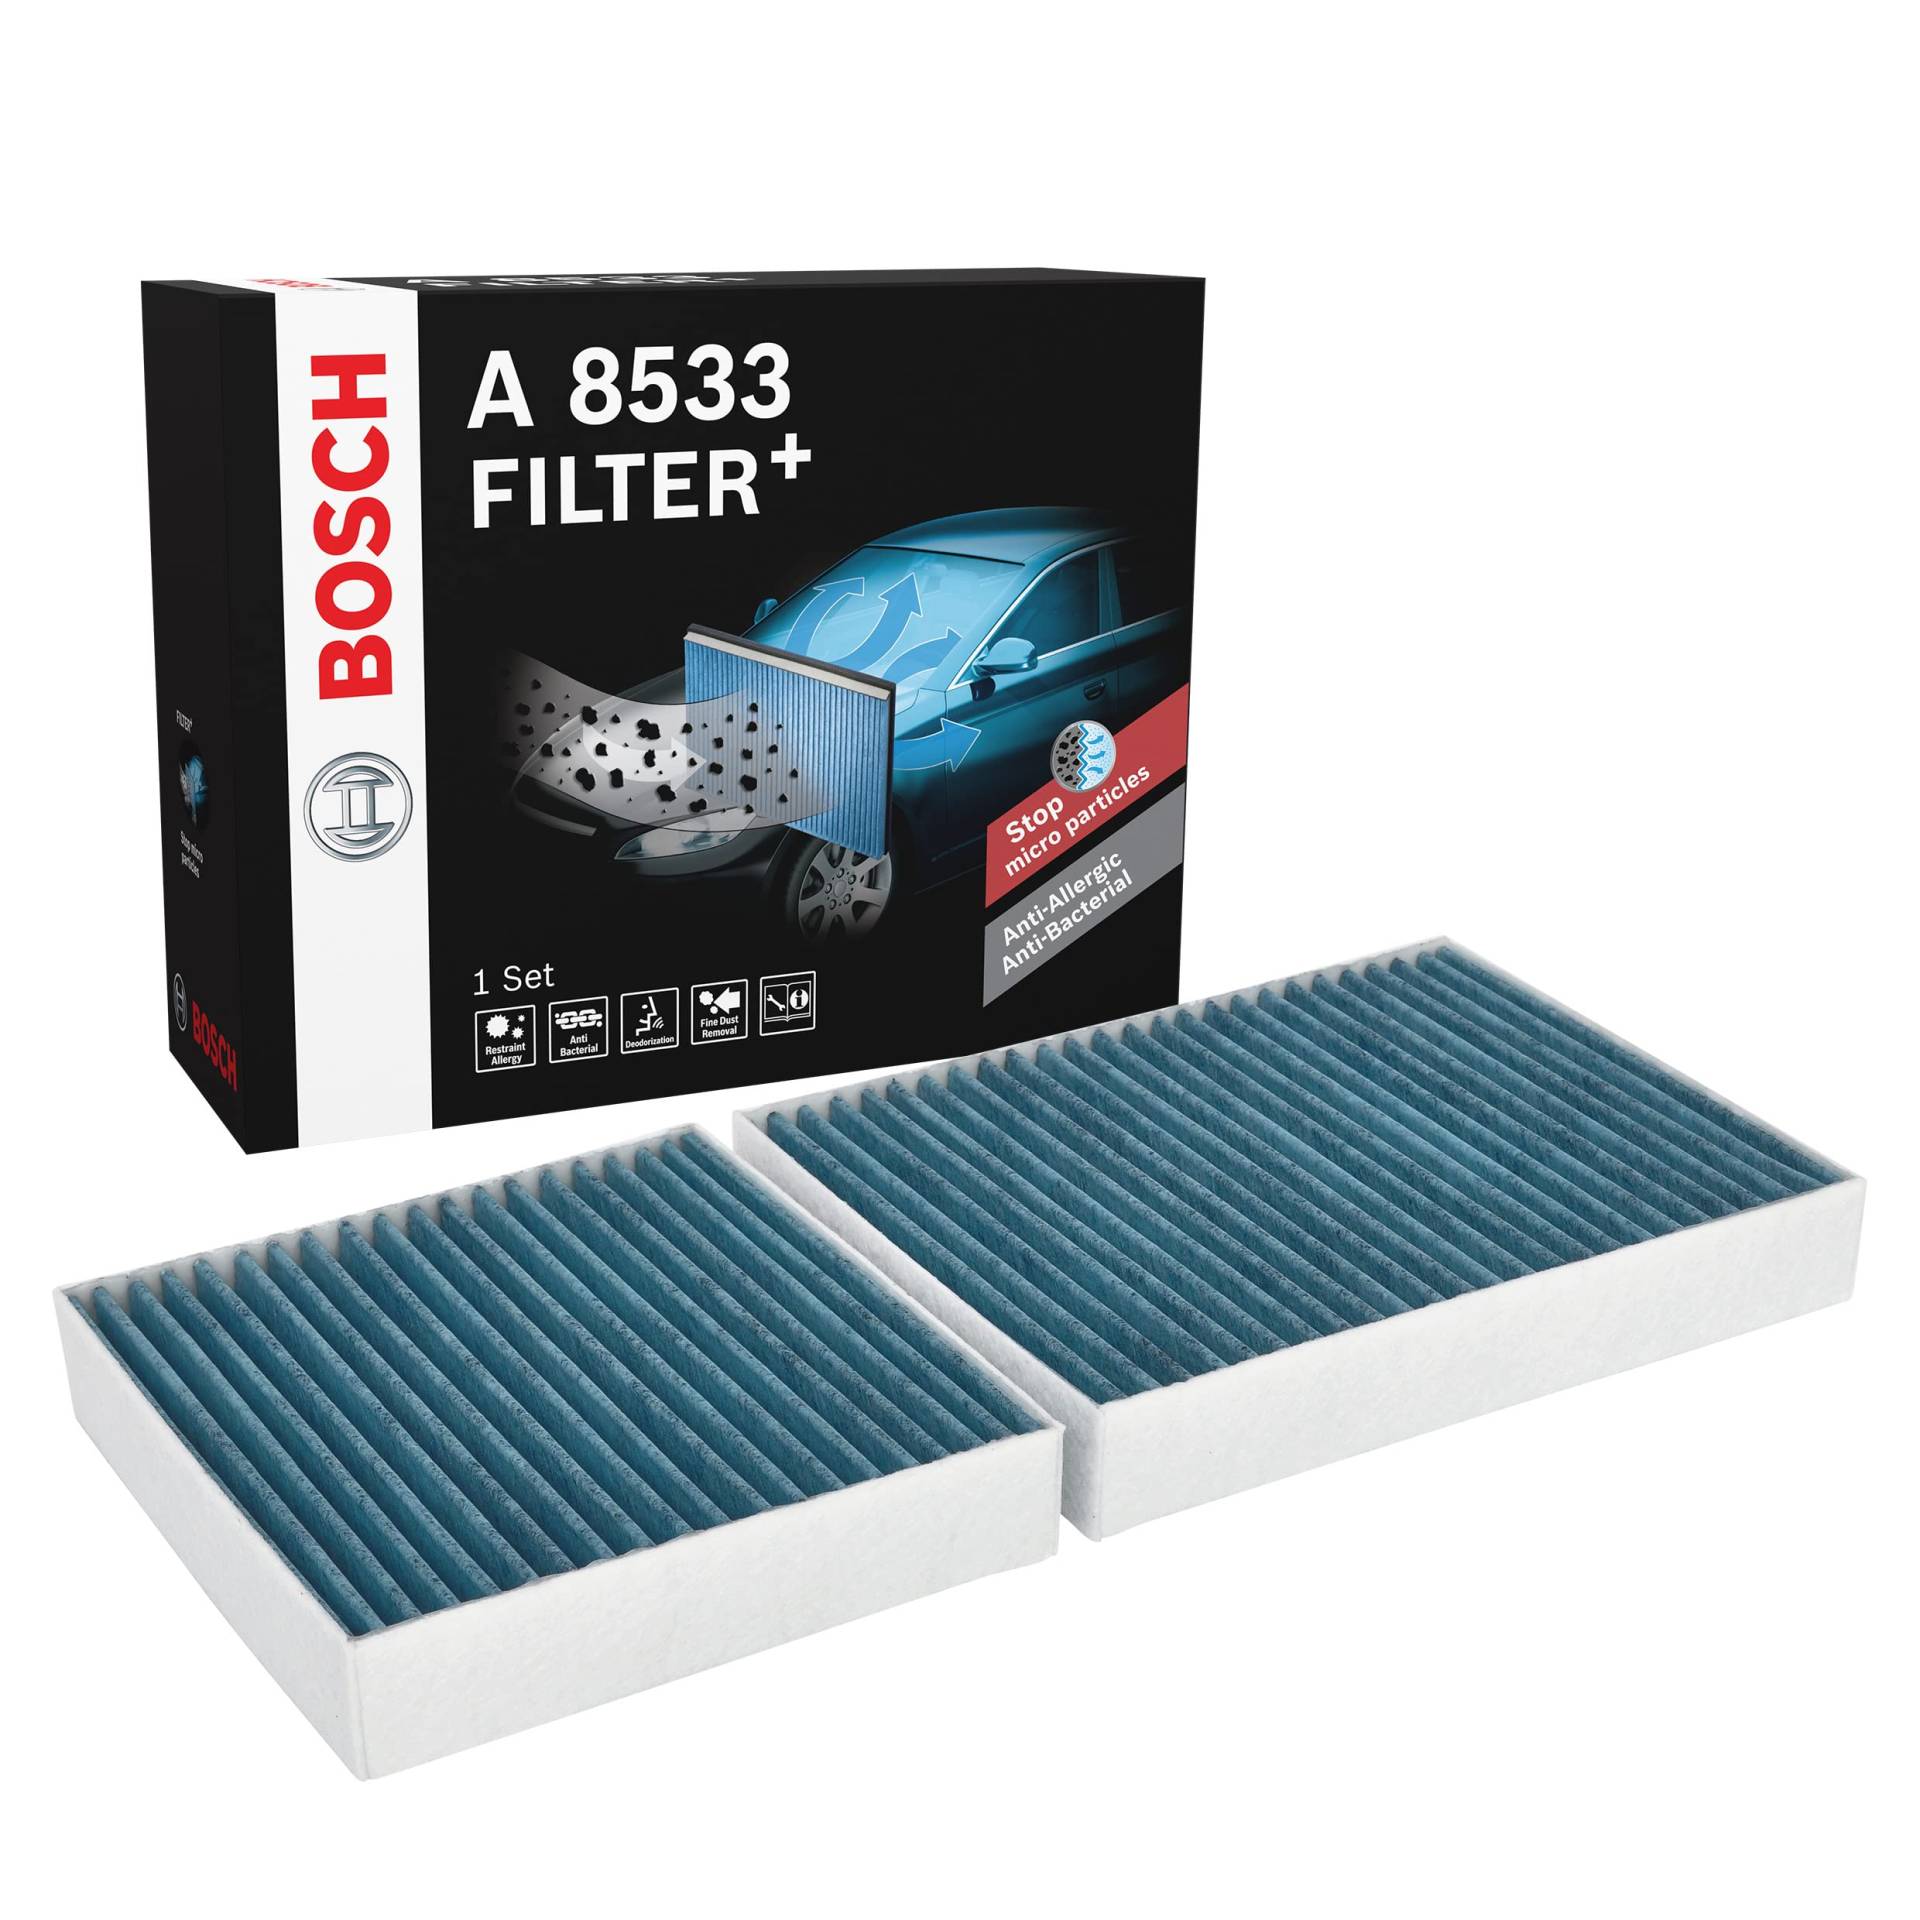 Bosch A8533 - Innenraumfilter Filter+ von Bosch Automotive